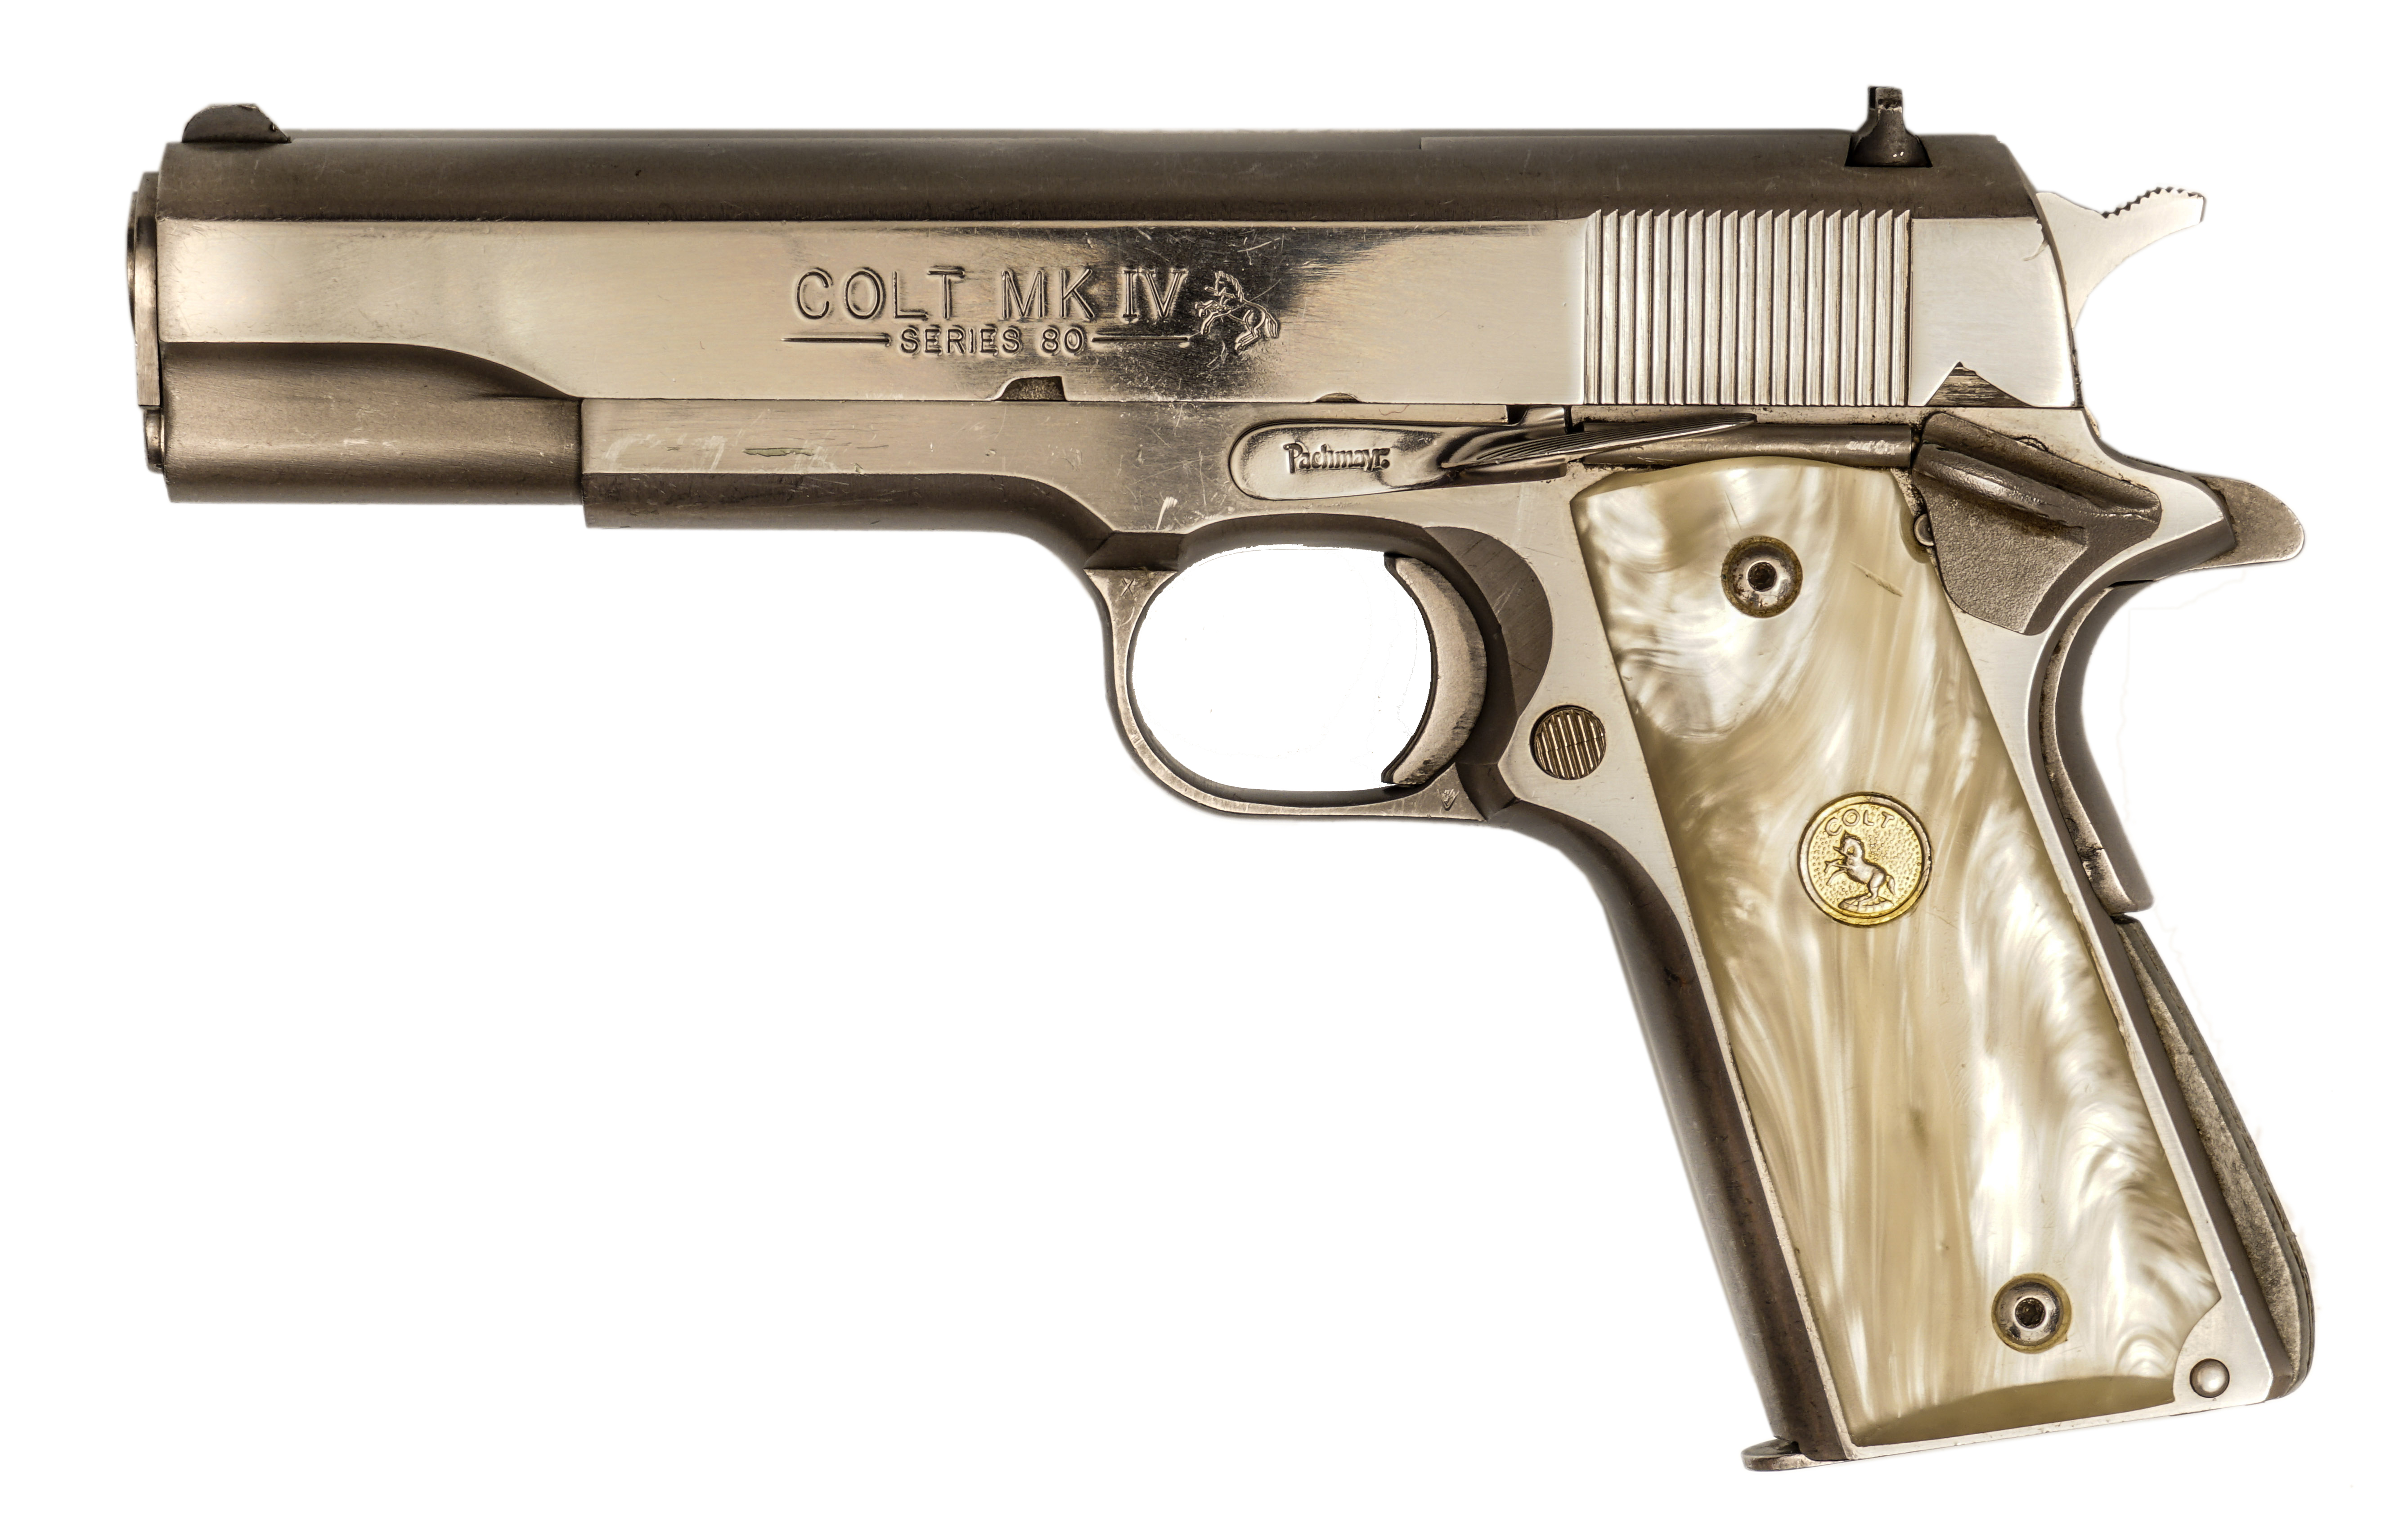 Serie 80. Colt MK IV. Colt ACP. Colt government Classic 45 ACP.